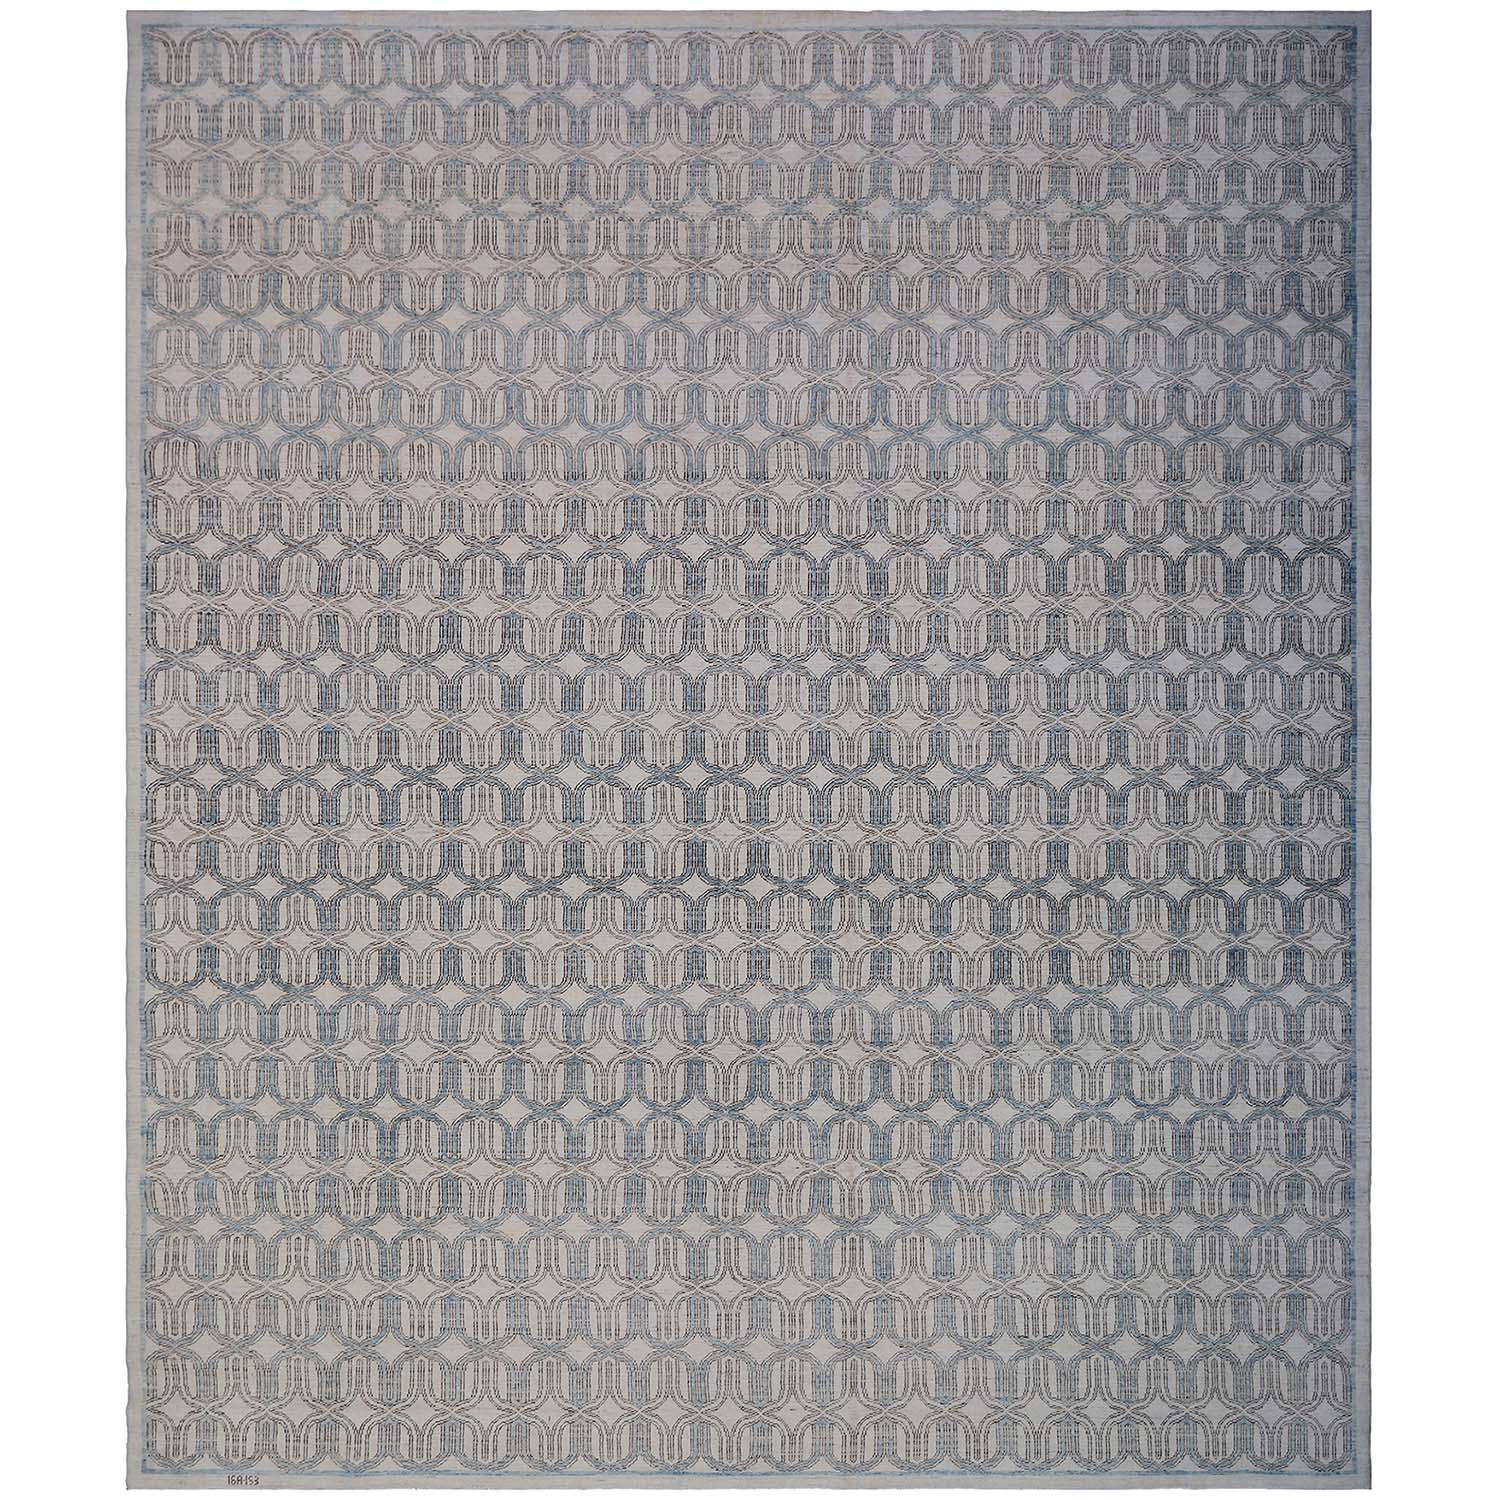 Monochromatic rectangular area rug with interlocking chain-like geometric pattern.